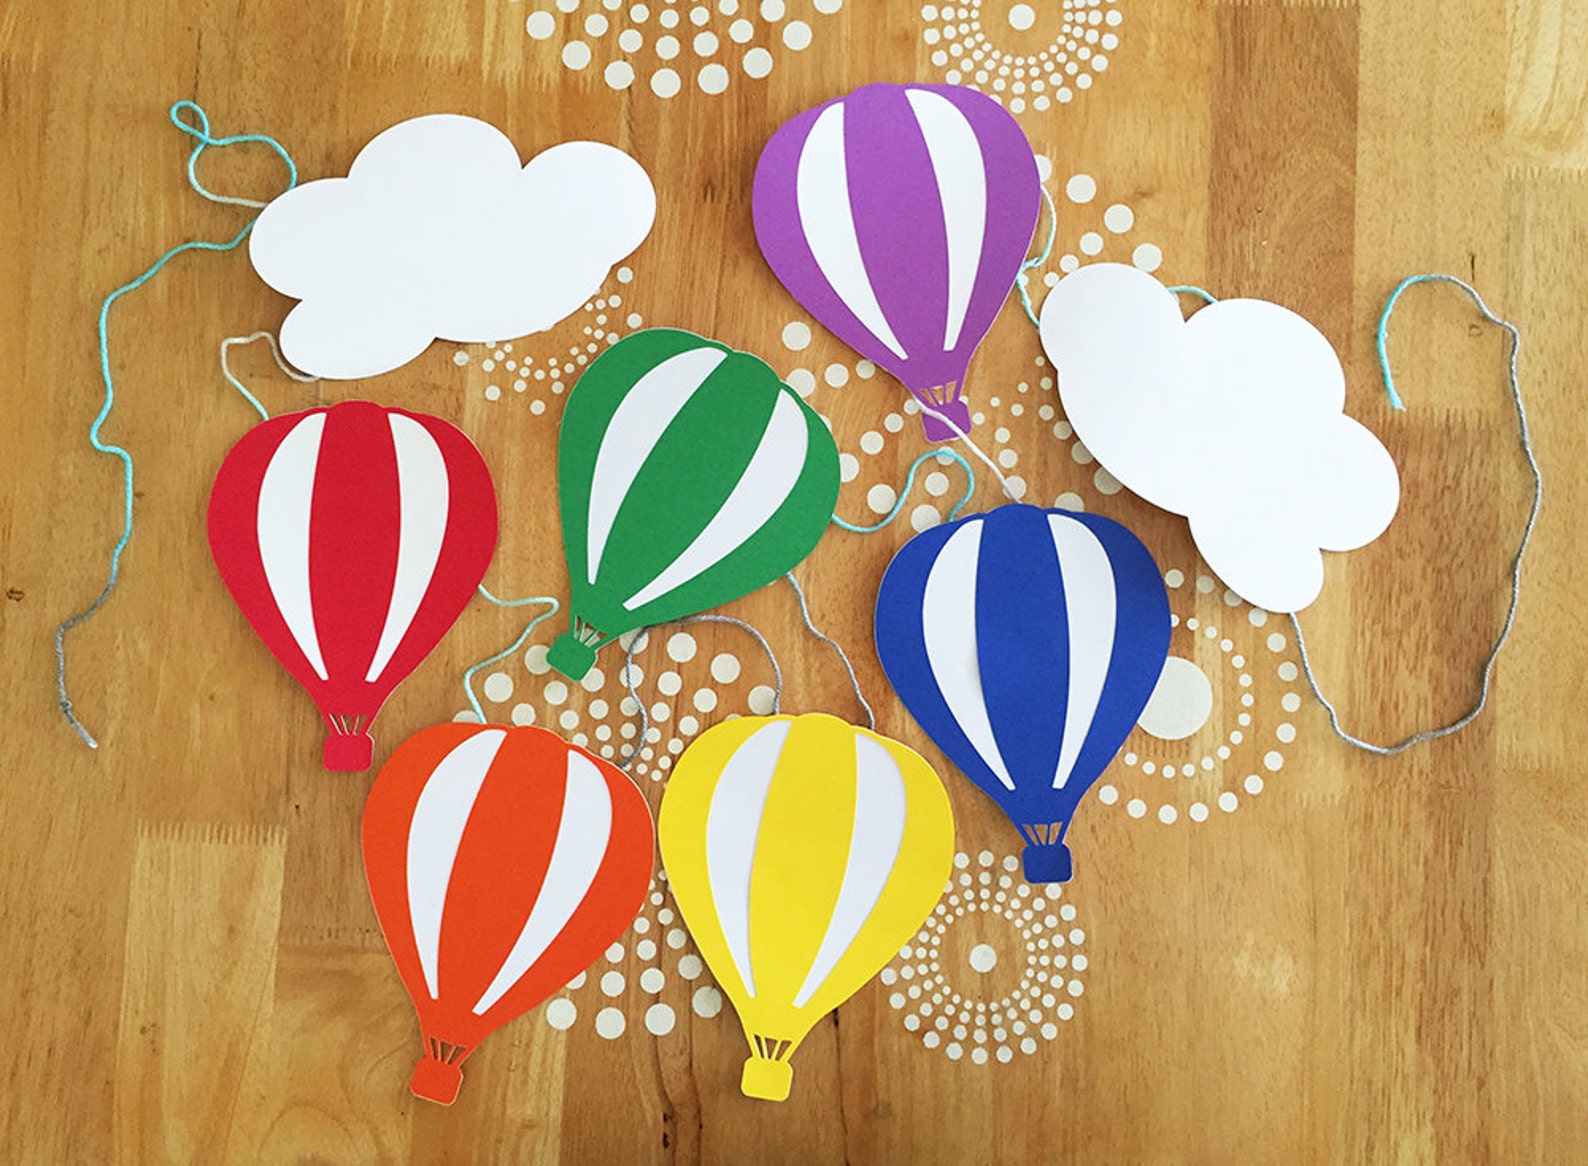 Воздушный шар технология. Объемный воздушный шар. Воздушный шар из бумаги. Аппликация воздушные шары. Воздушный шар из цветной бумаги.